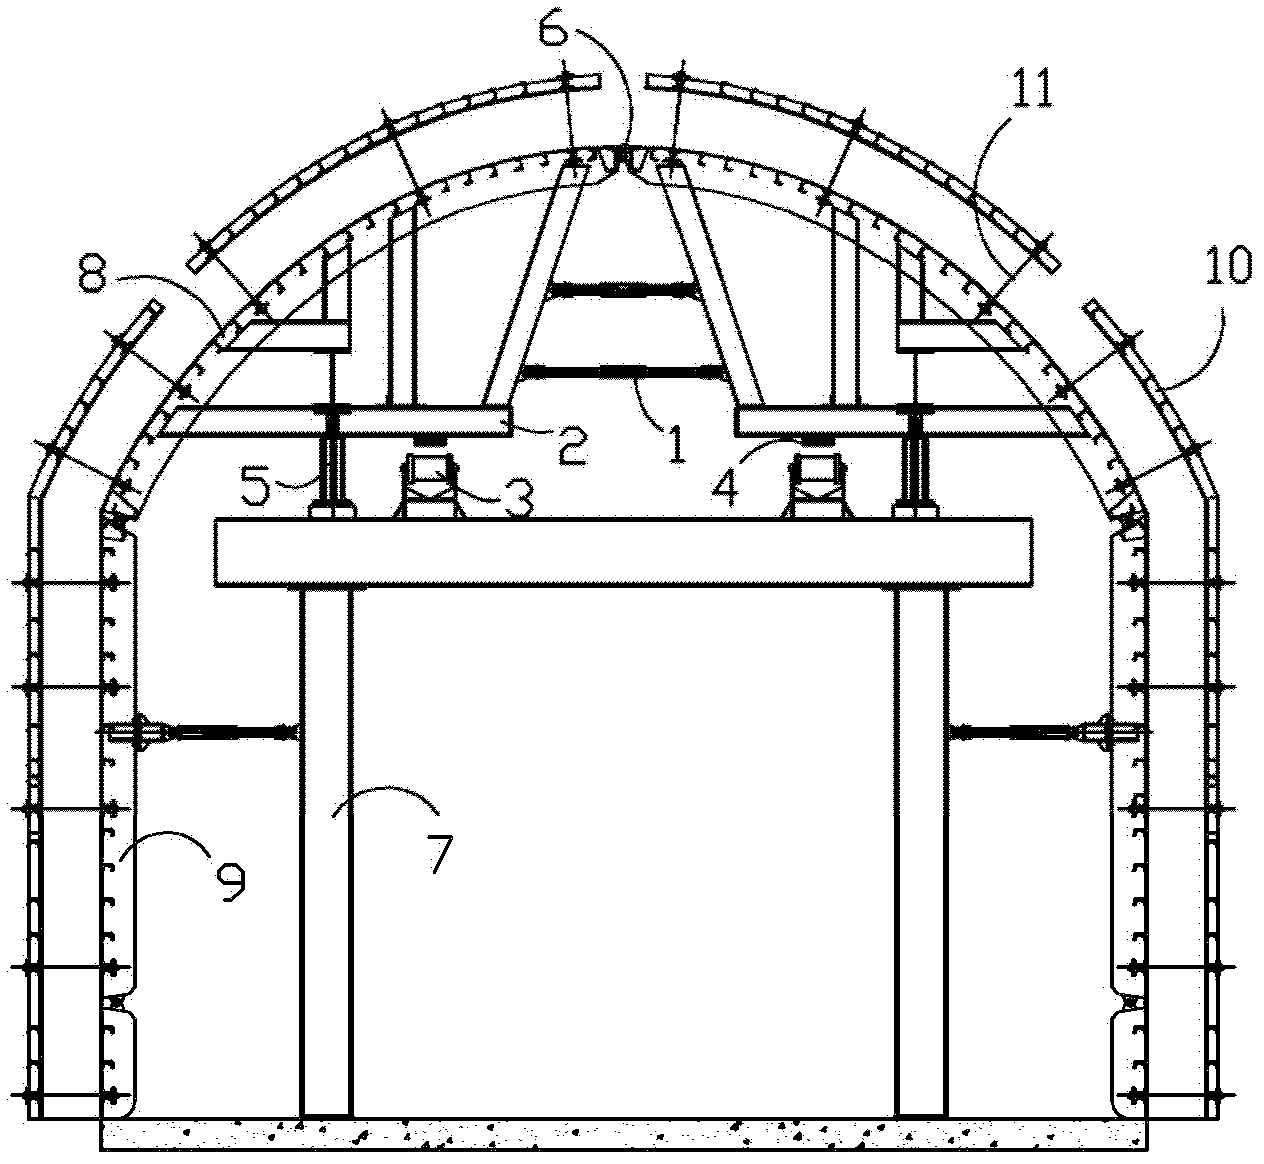 Semi-automatic arch culvert construction template